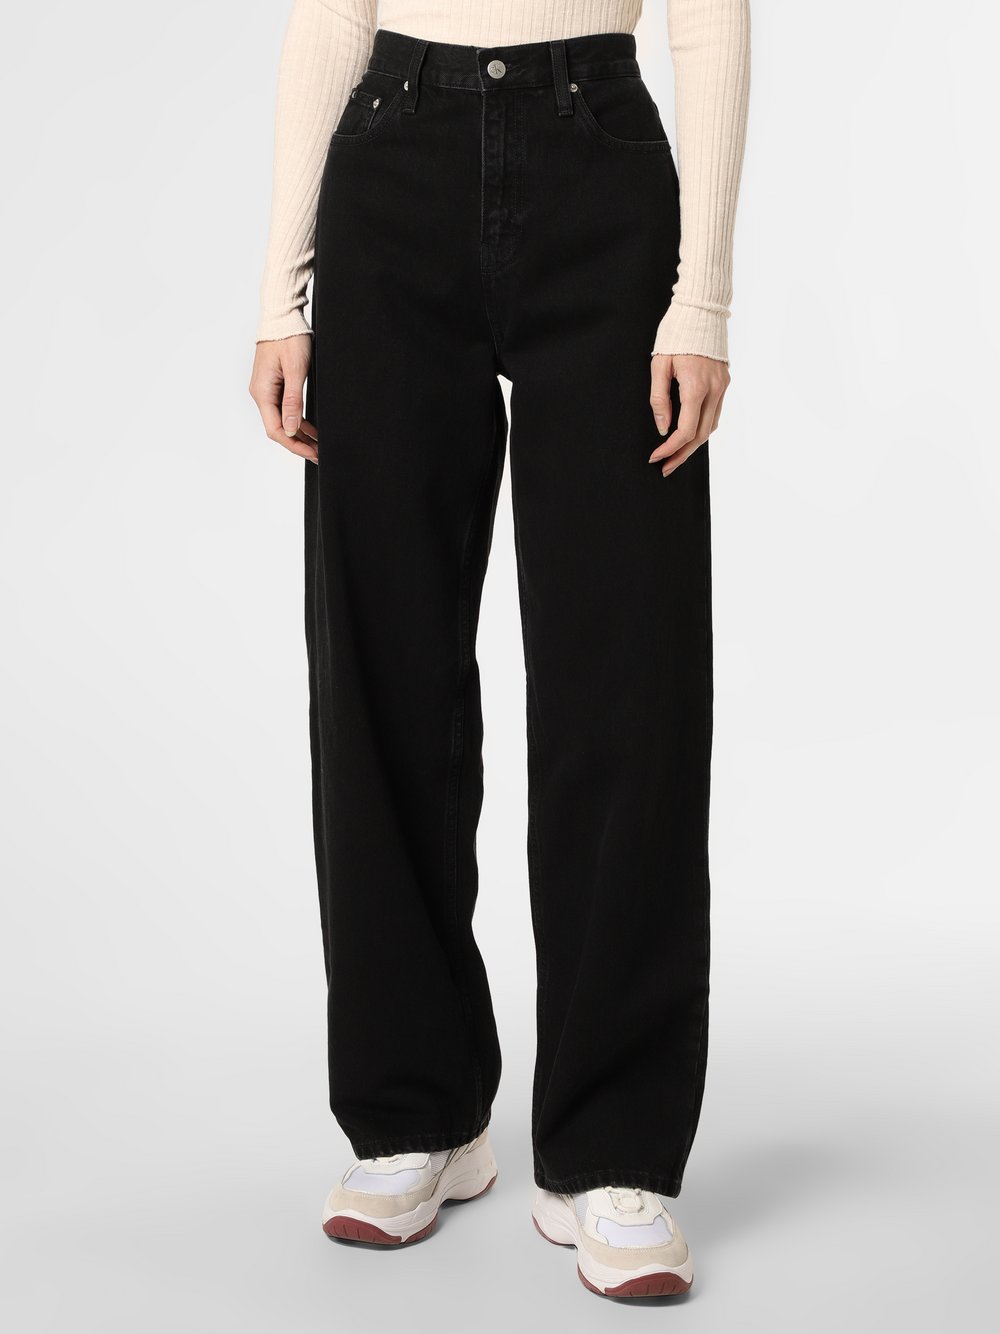 Calvin Klein Jeans - Jeansy damskie, czarny